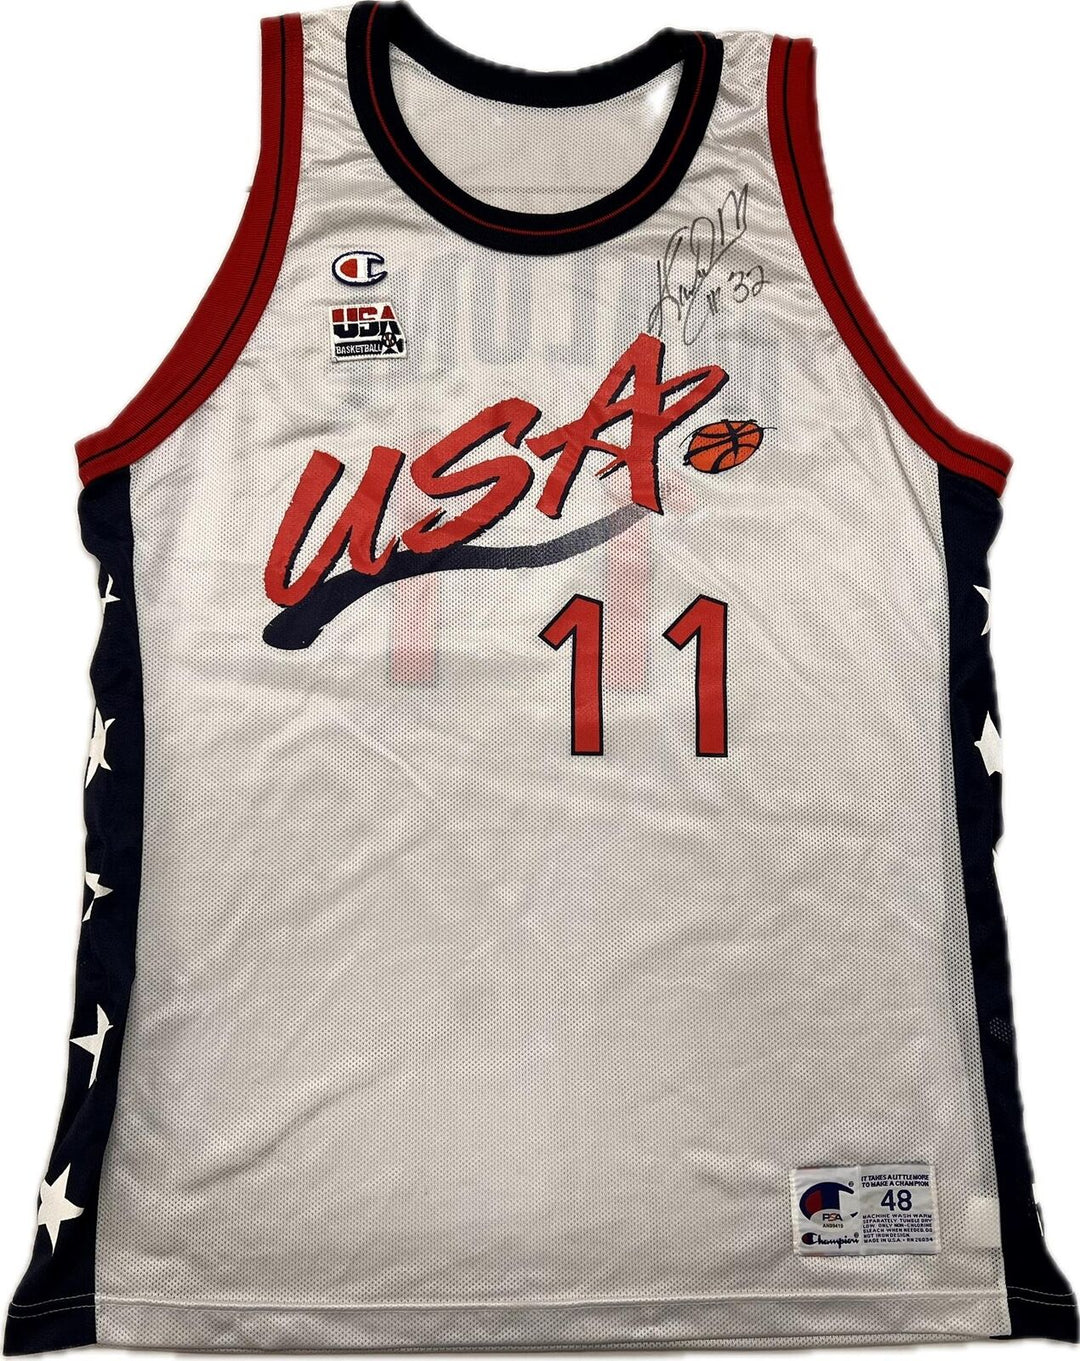 KARL MALONE signed jersey PSA/DNA Utah Jazz Team USA Autographed Image 1